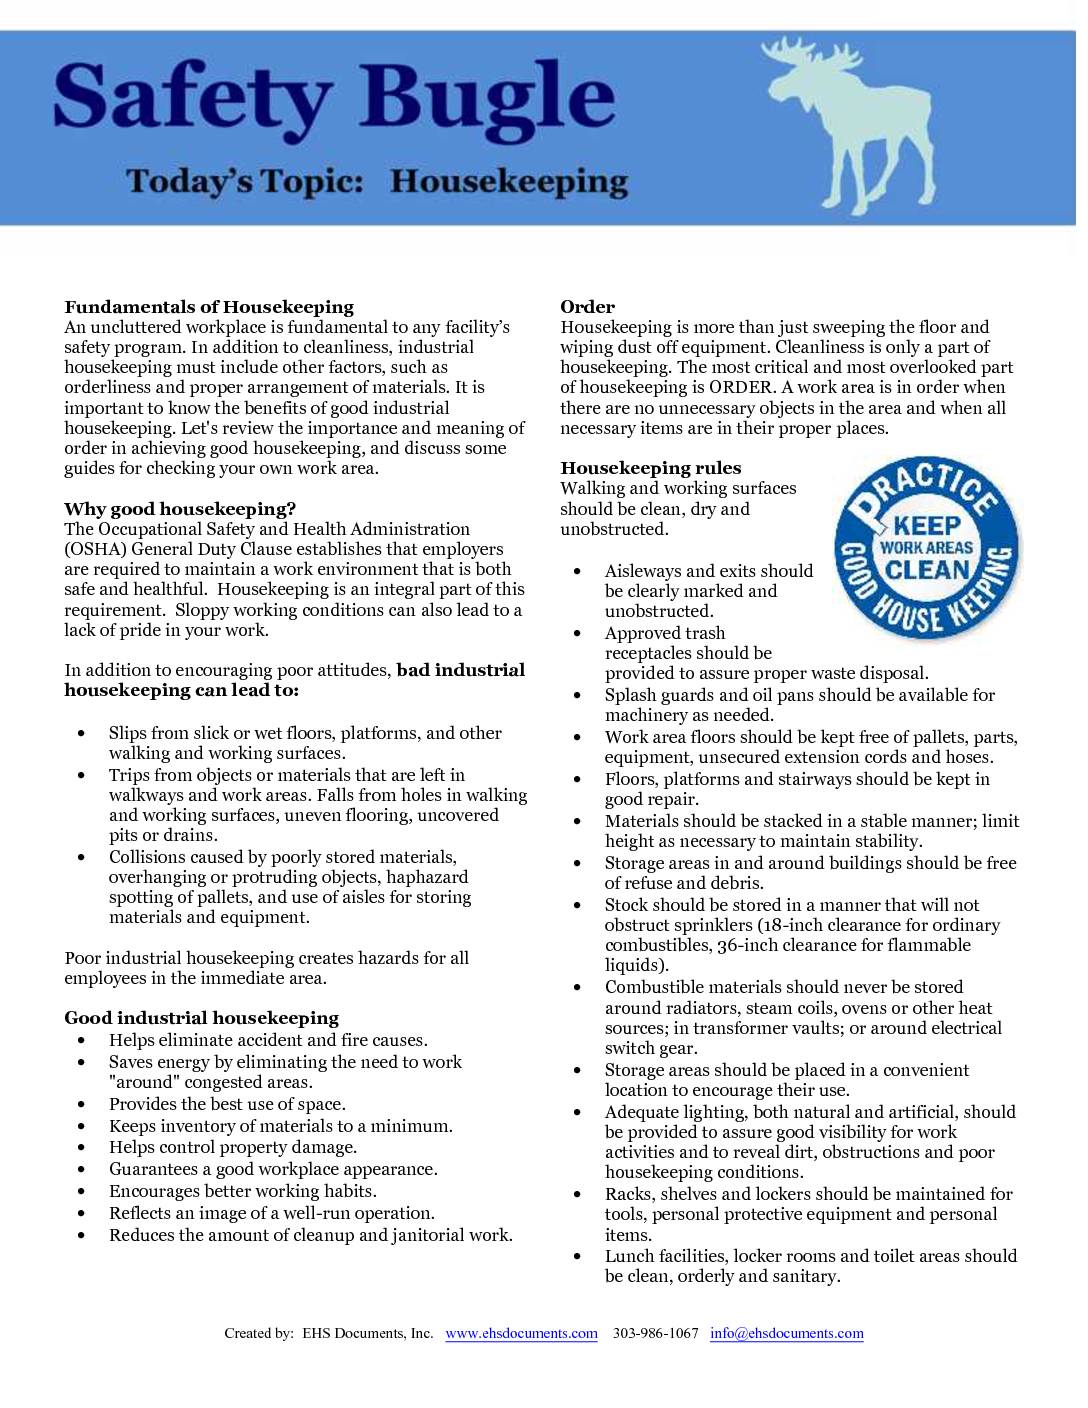 Housekeeping At Workplace, Housekeeping safety, Benefits of Good  Housekeeping